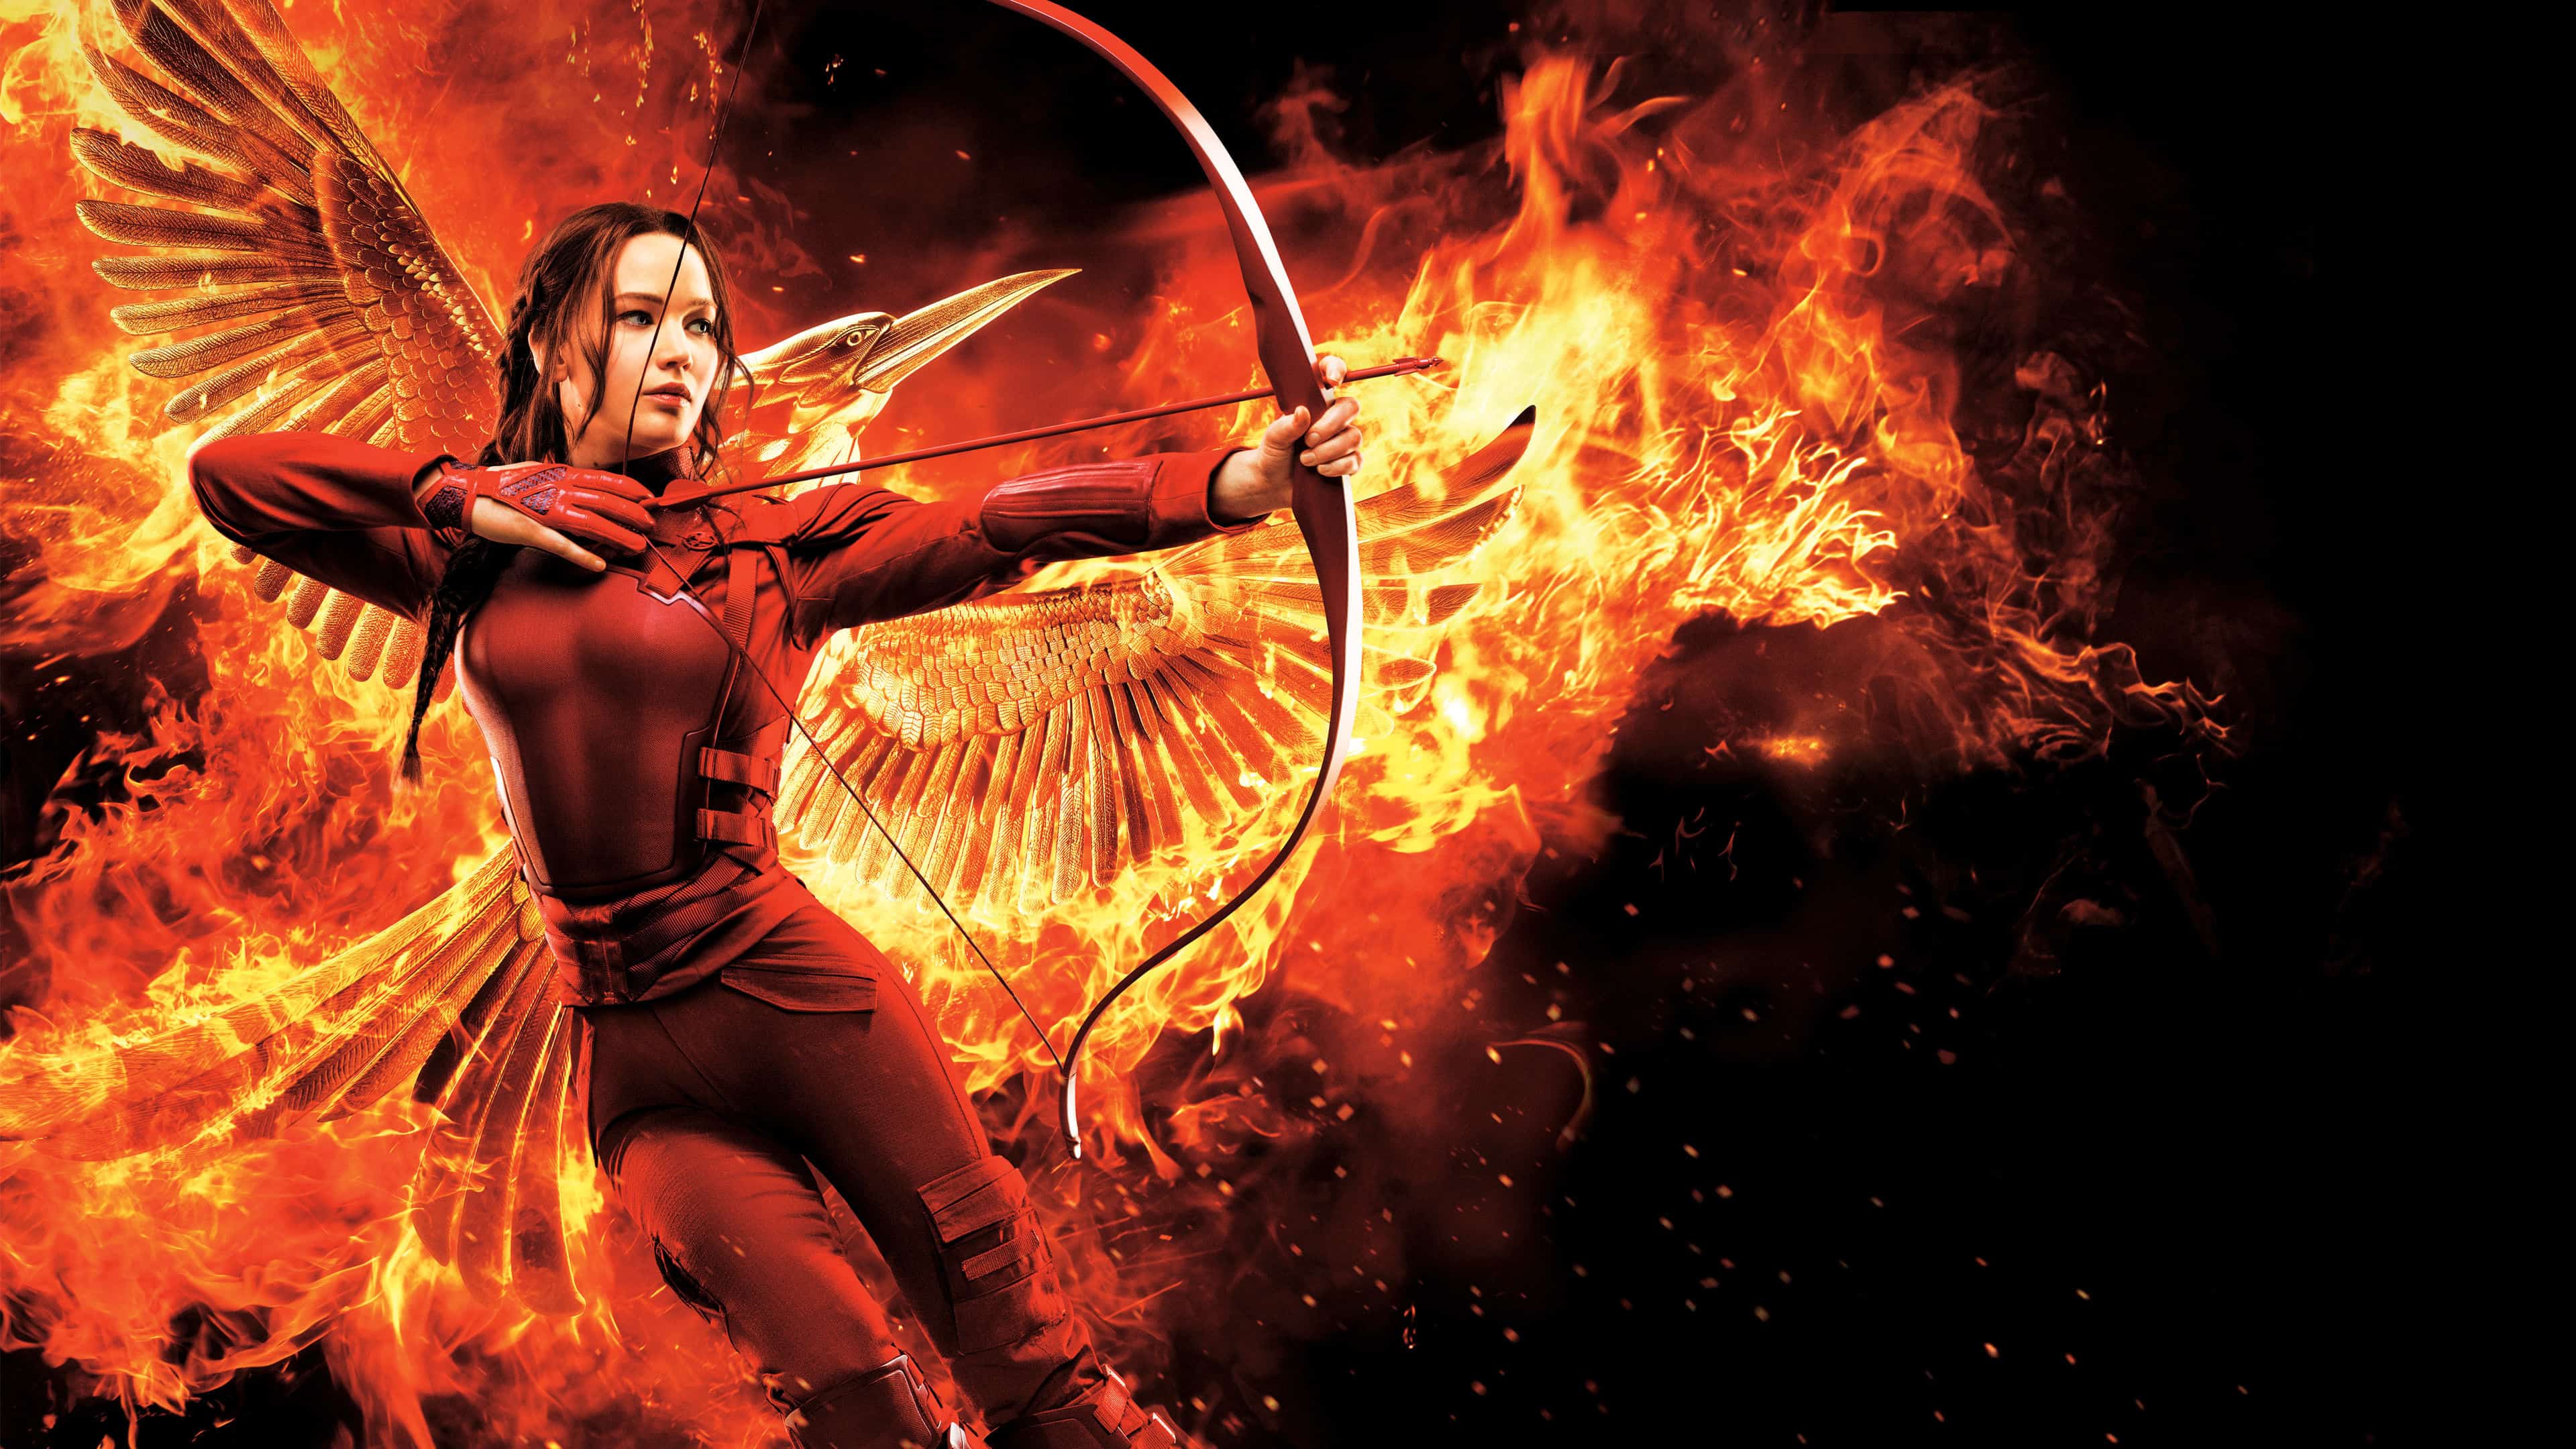 Hunger Games Mockingjay Part 2 UHD 4K Wallpaper